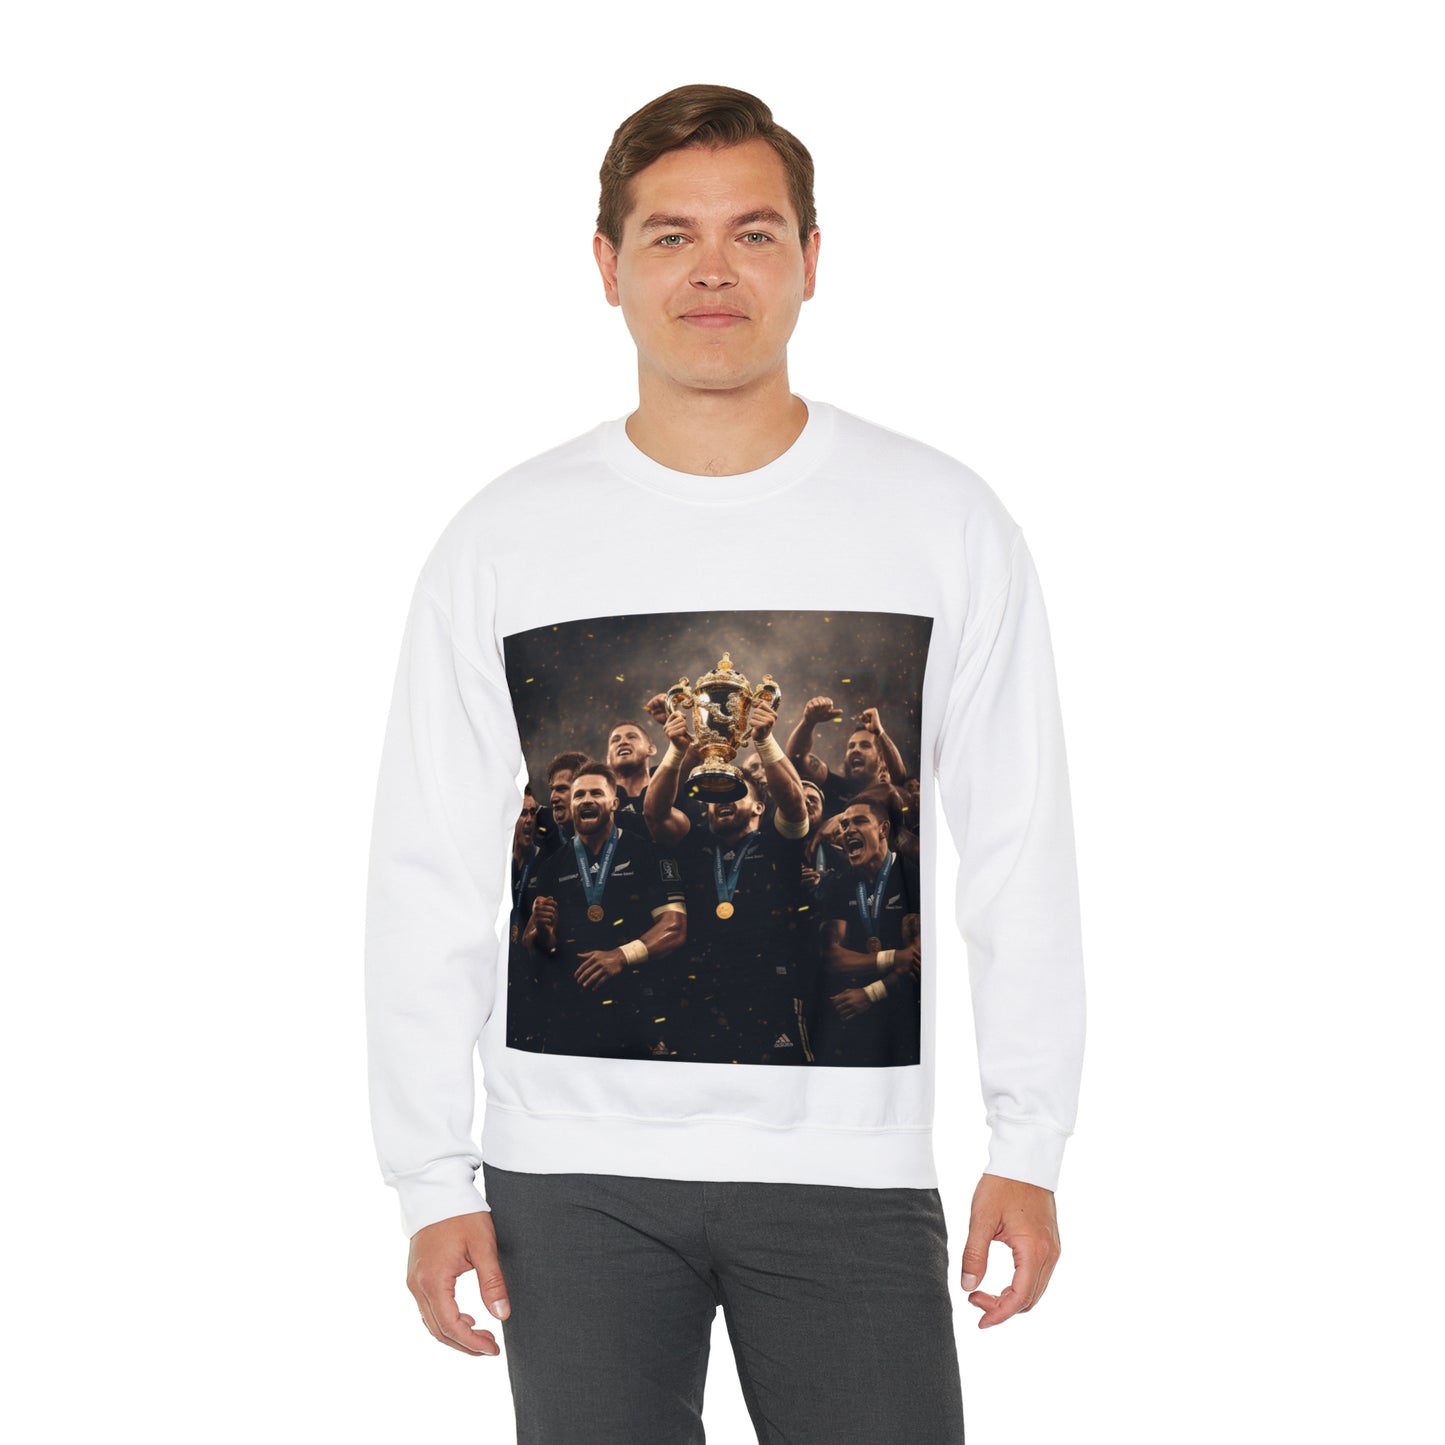 All Blacks World Cup Winners - light sweatshirts